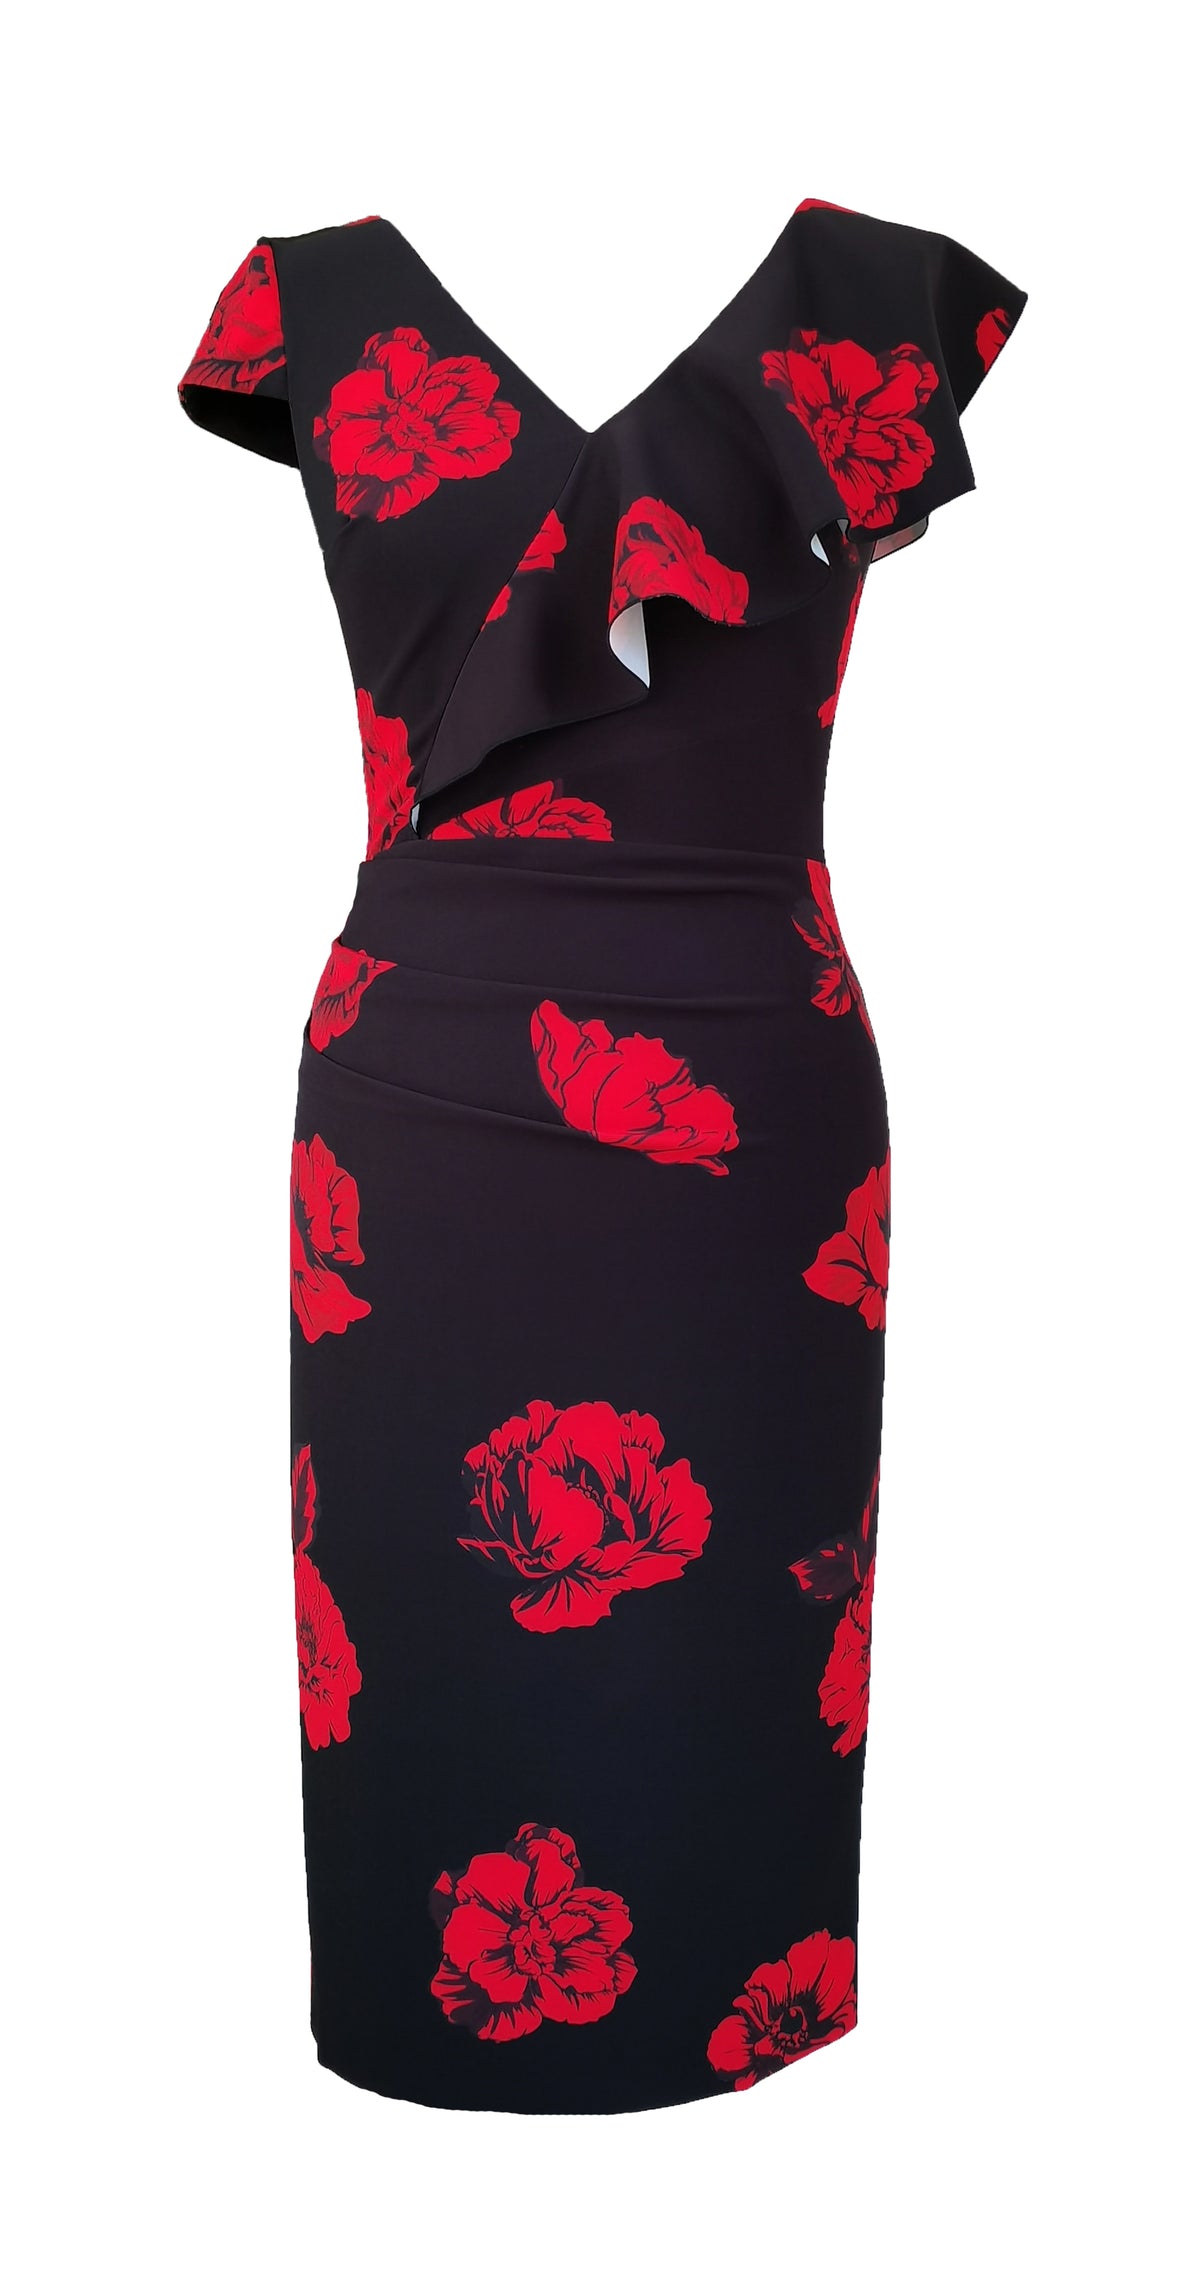 Arina Dress DRC354 Black and Red Rose Print